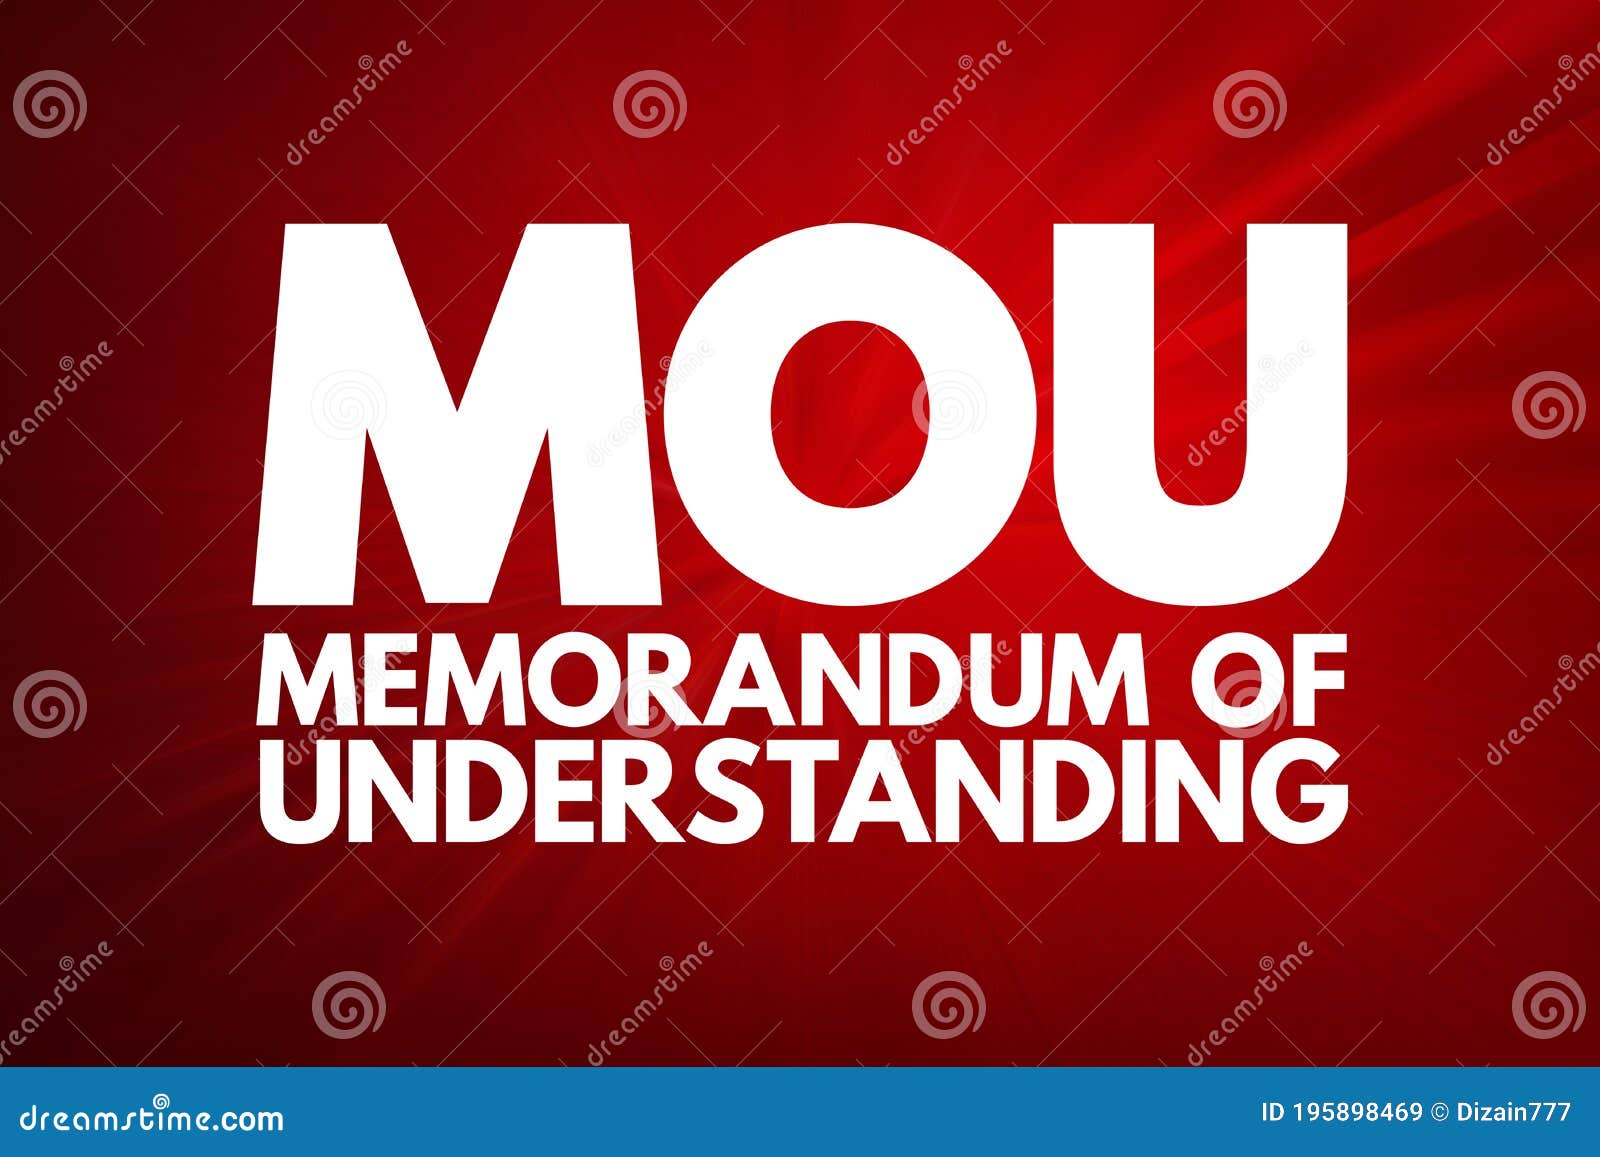 mou - memorandum of understanding acronym, business concept background